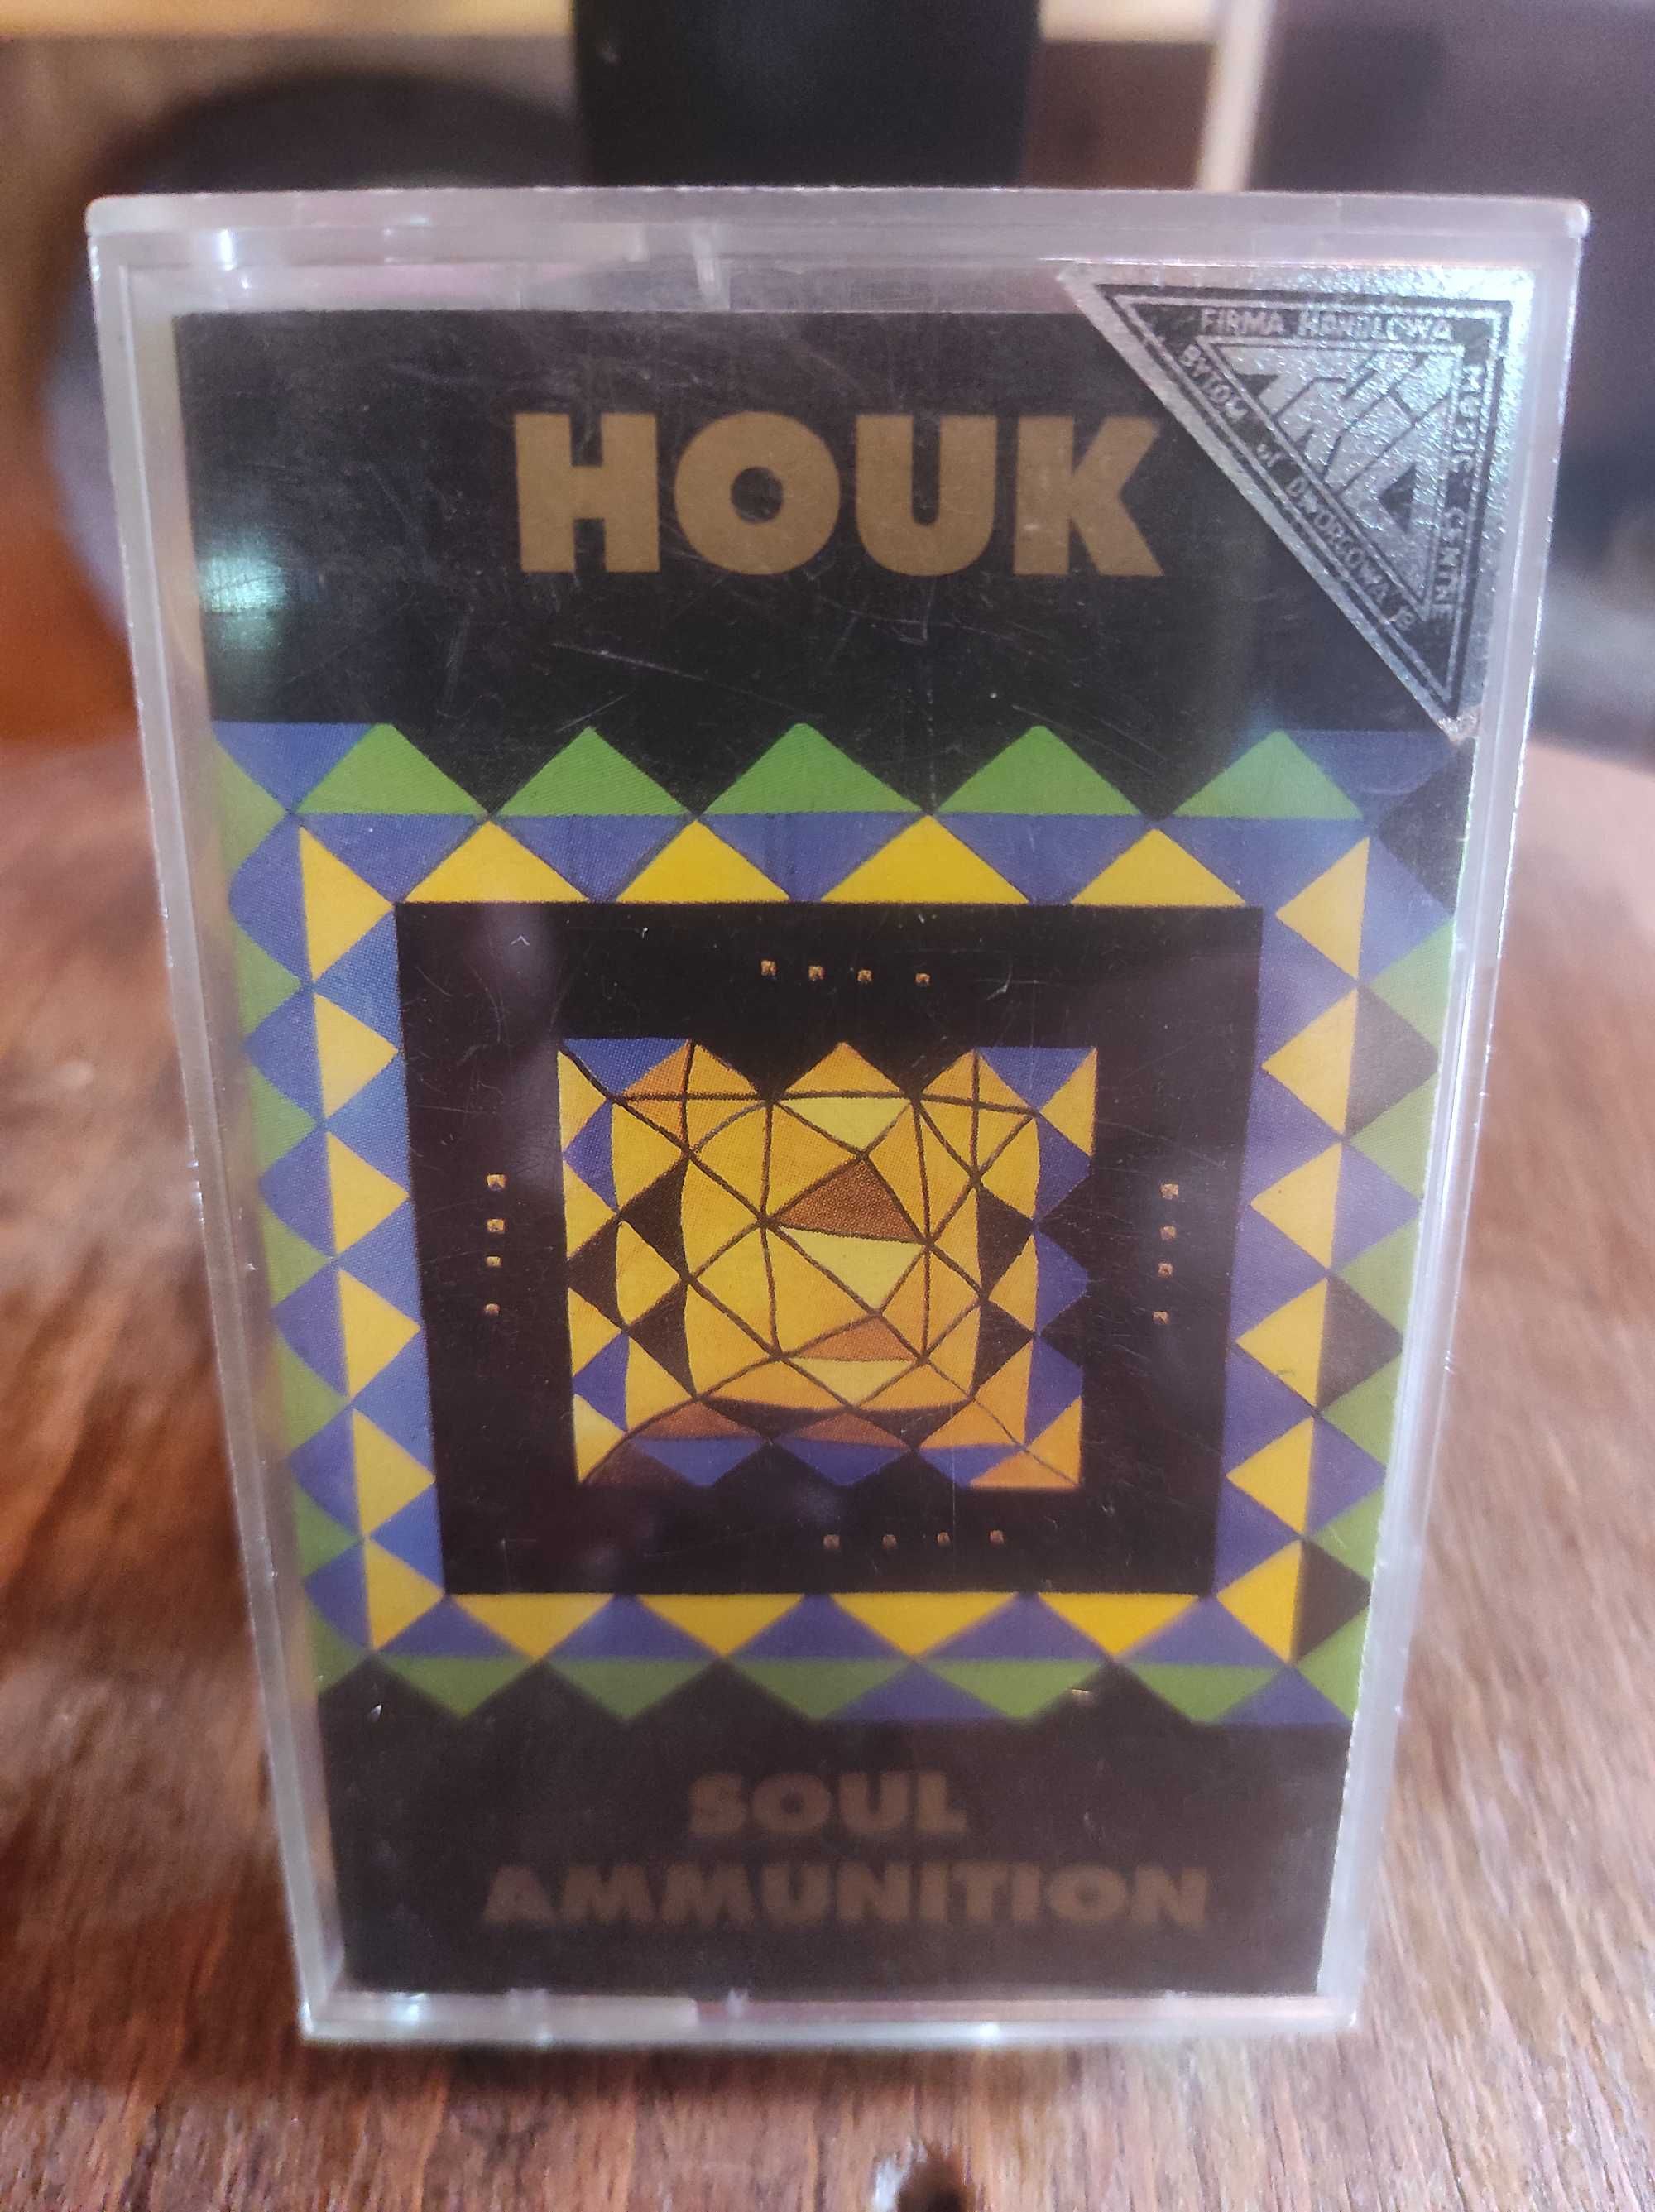 Kaseta Houk Soul Ammunition